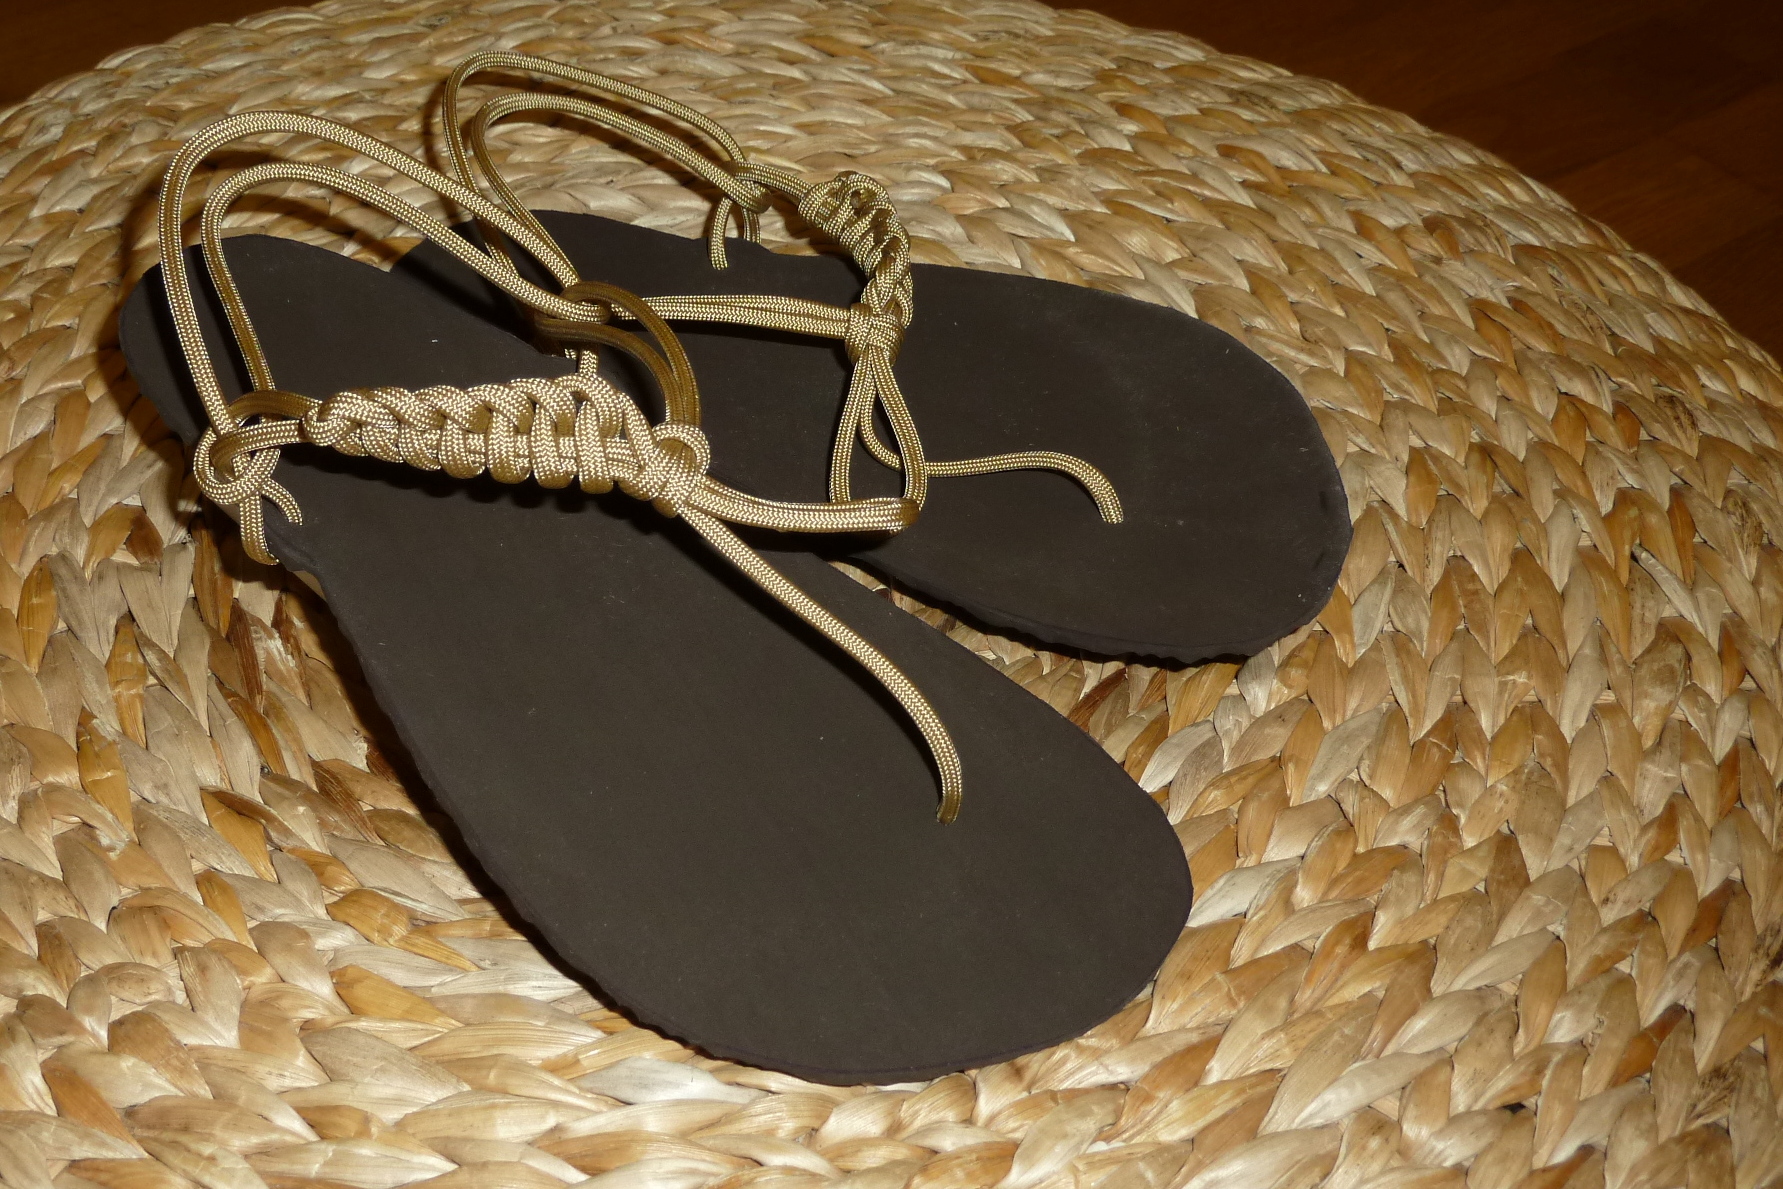 Barefoot sandály s úvazem Classic